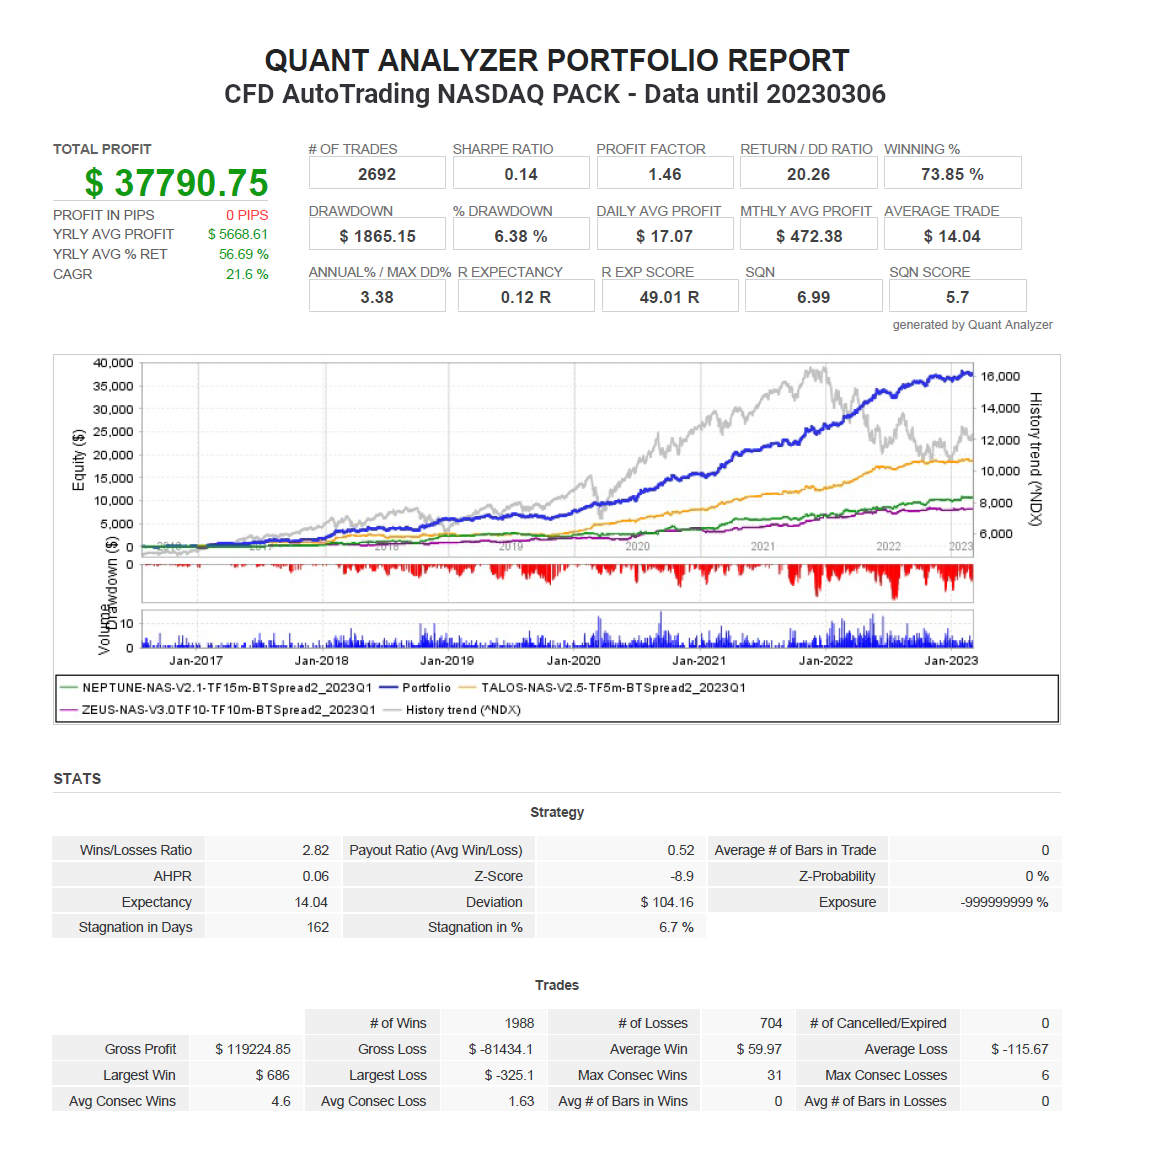 CFDAutoTrading QuantAnalyzerReport2023Q1 NASDAQ PACK Summary